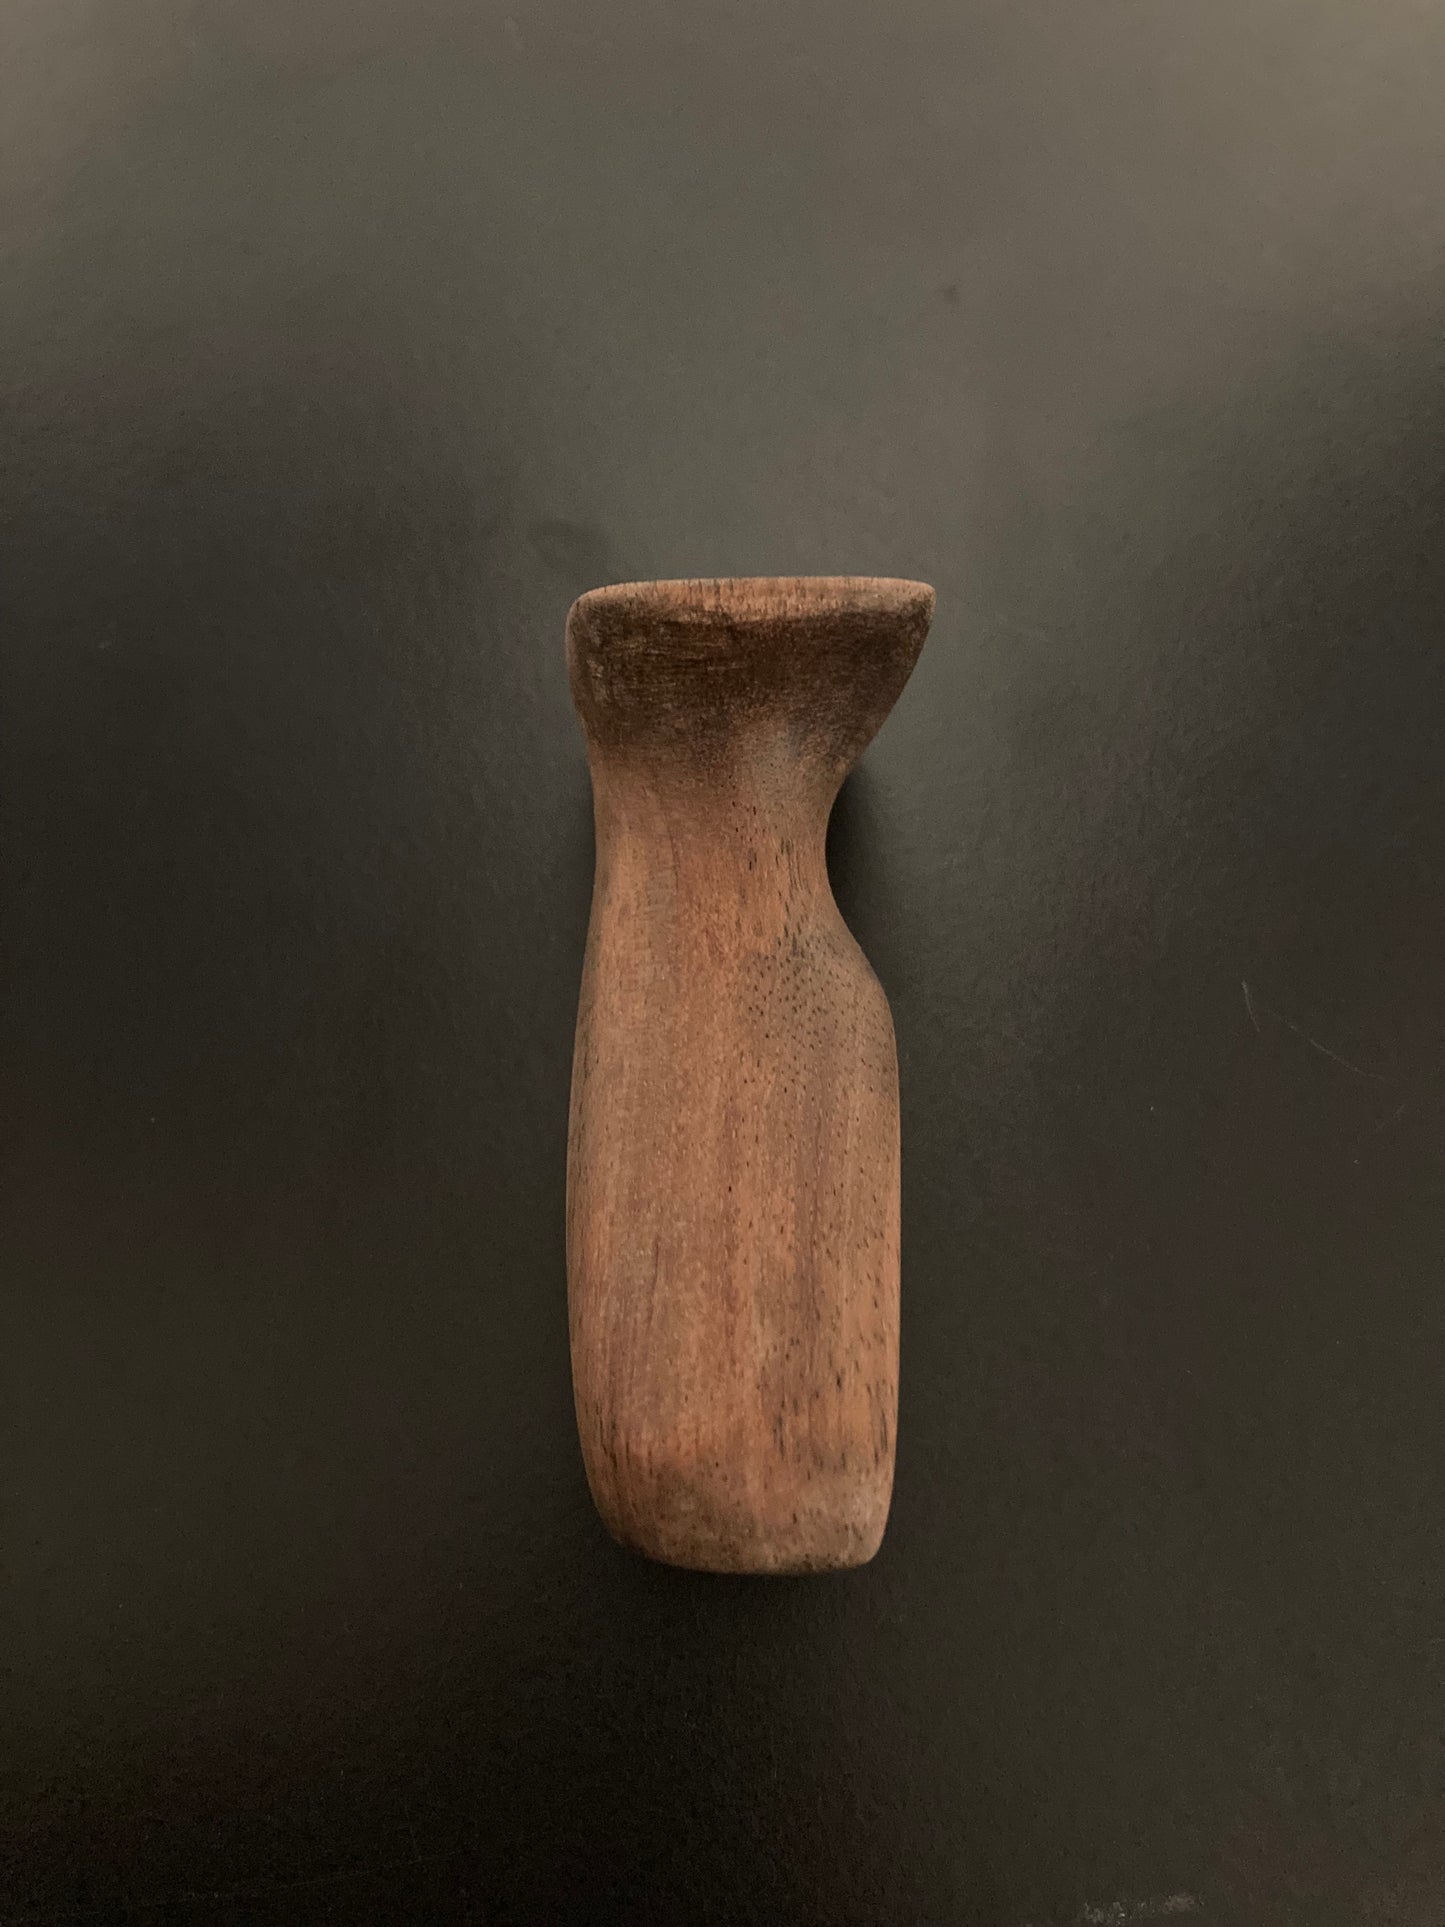 Hoyt Matrix RH Wooden Grip - Used